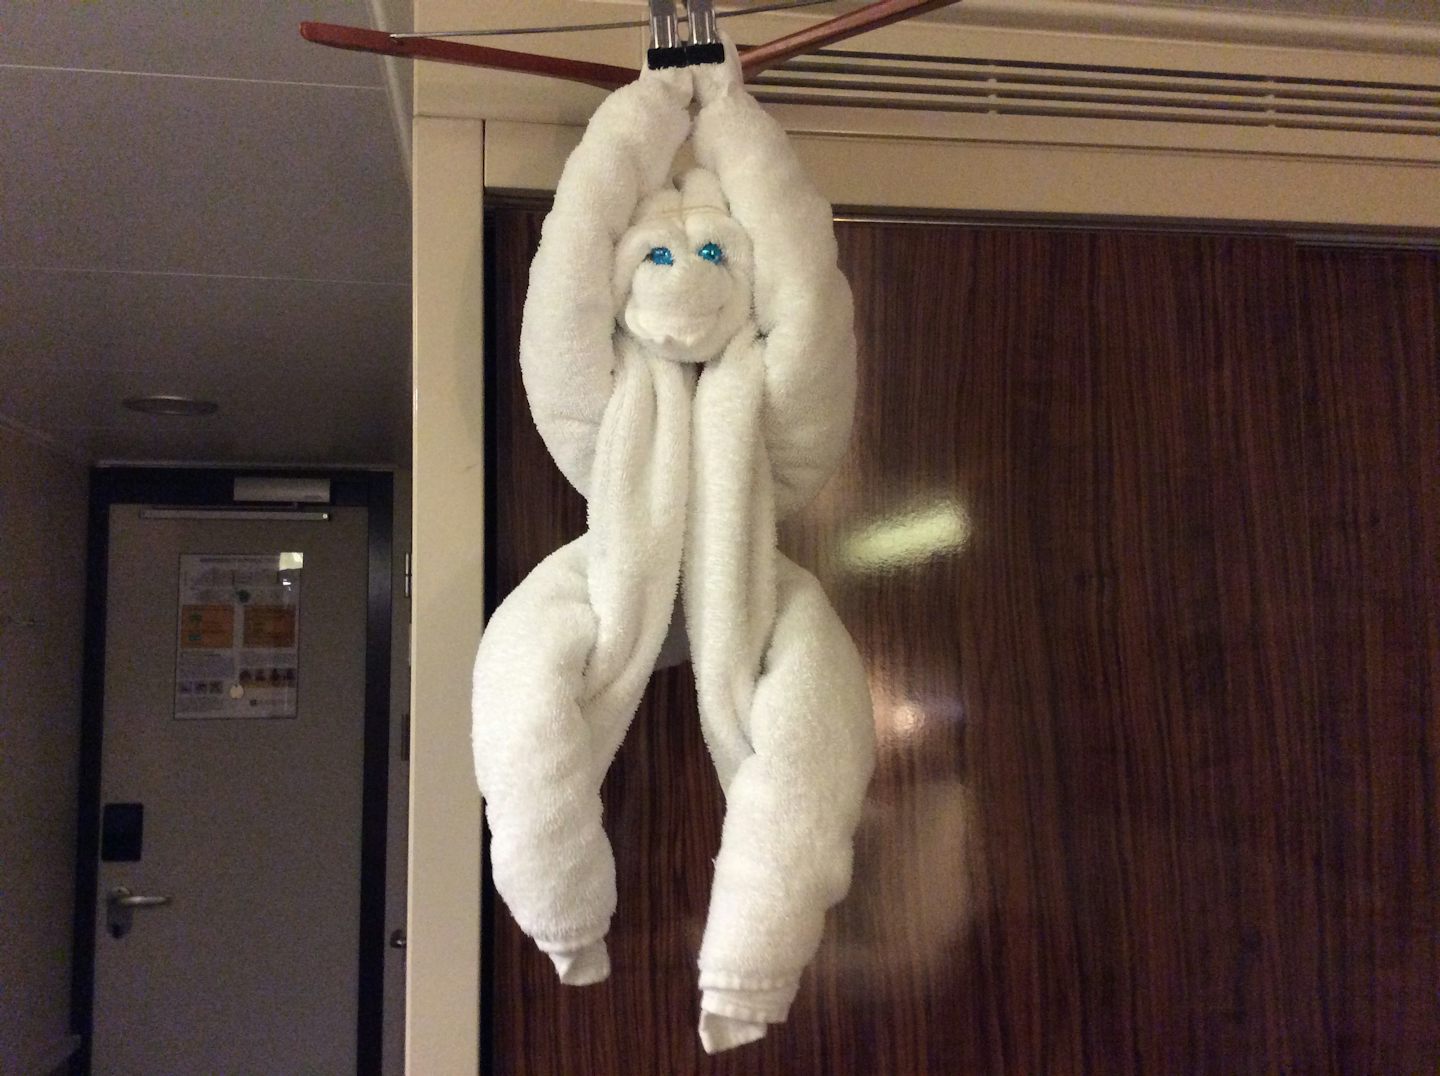 Towel monkey